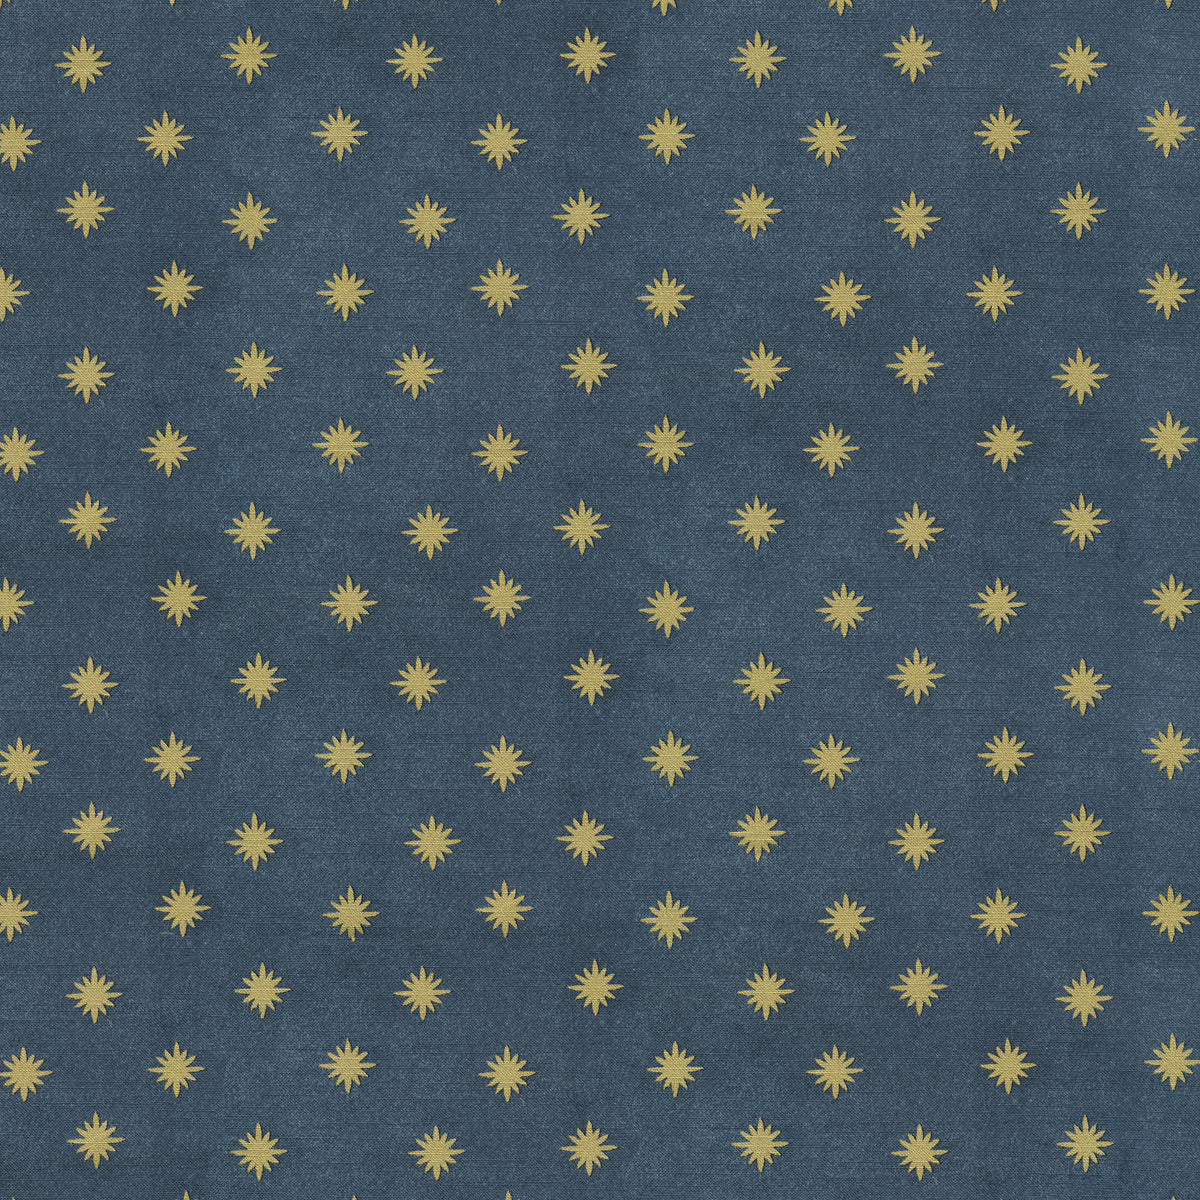 P/K Lifestyles Starry - Luna 412210 Upholstery Fabric